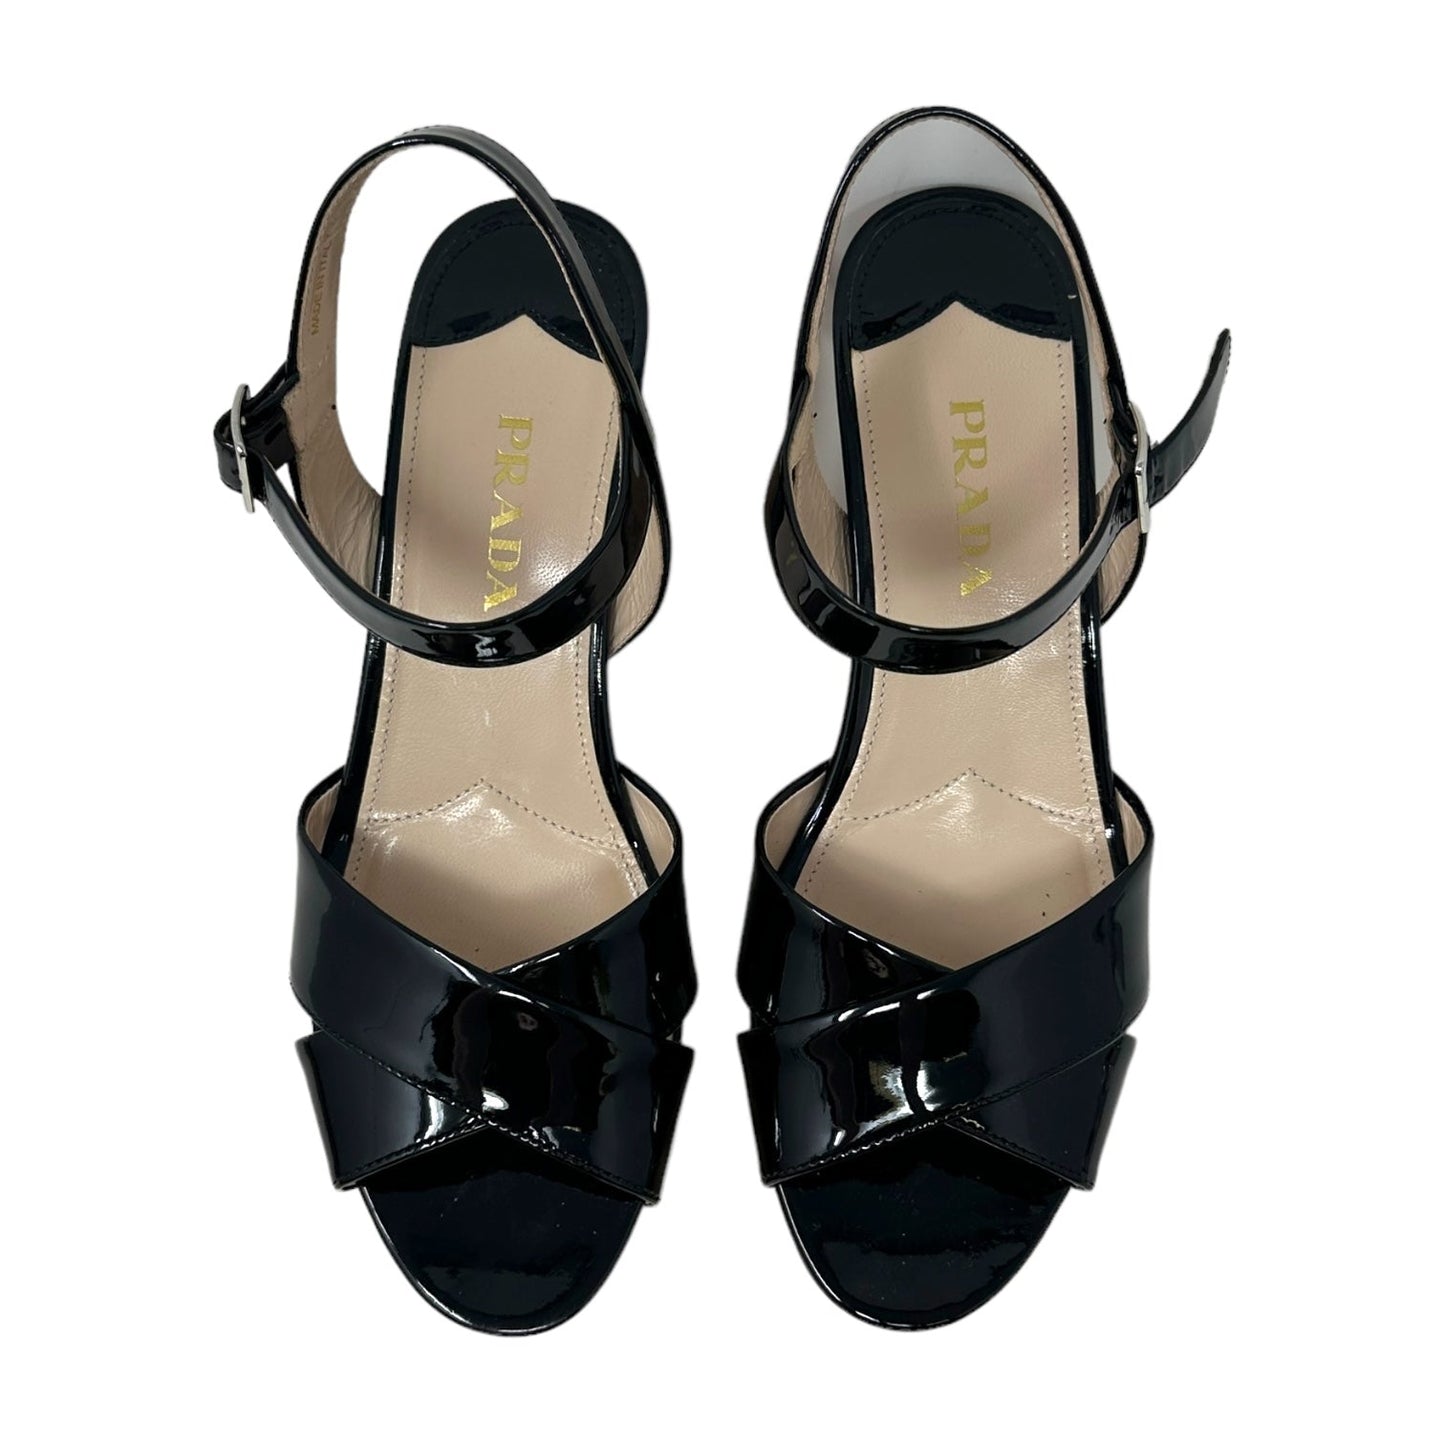 Calzature Donna Vernice 3 Patent Leather Cork Wedge Sandals-Nero Luxury Designer By Prada  Size: 9